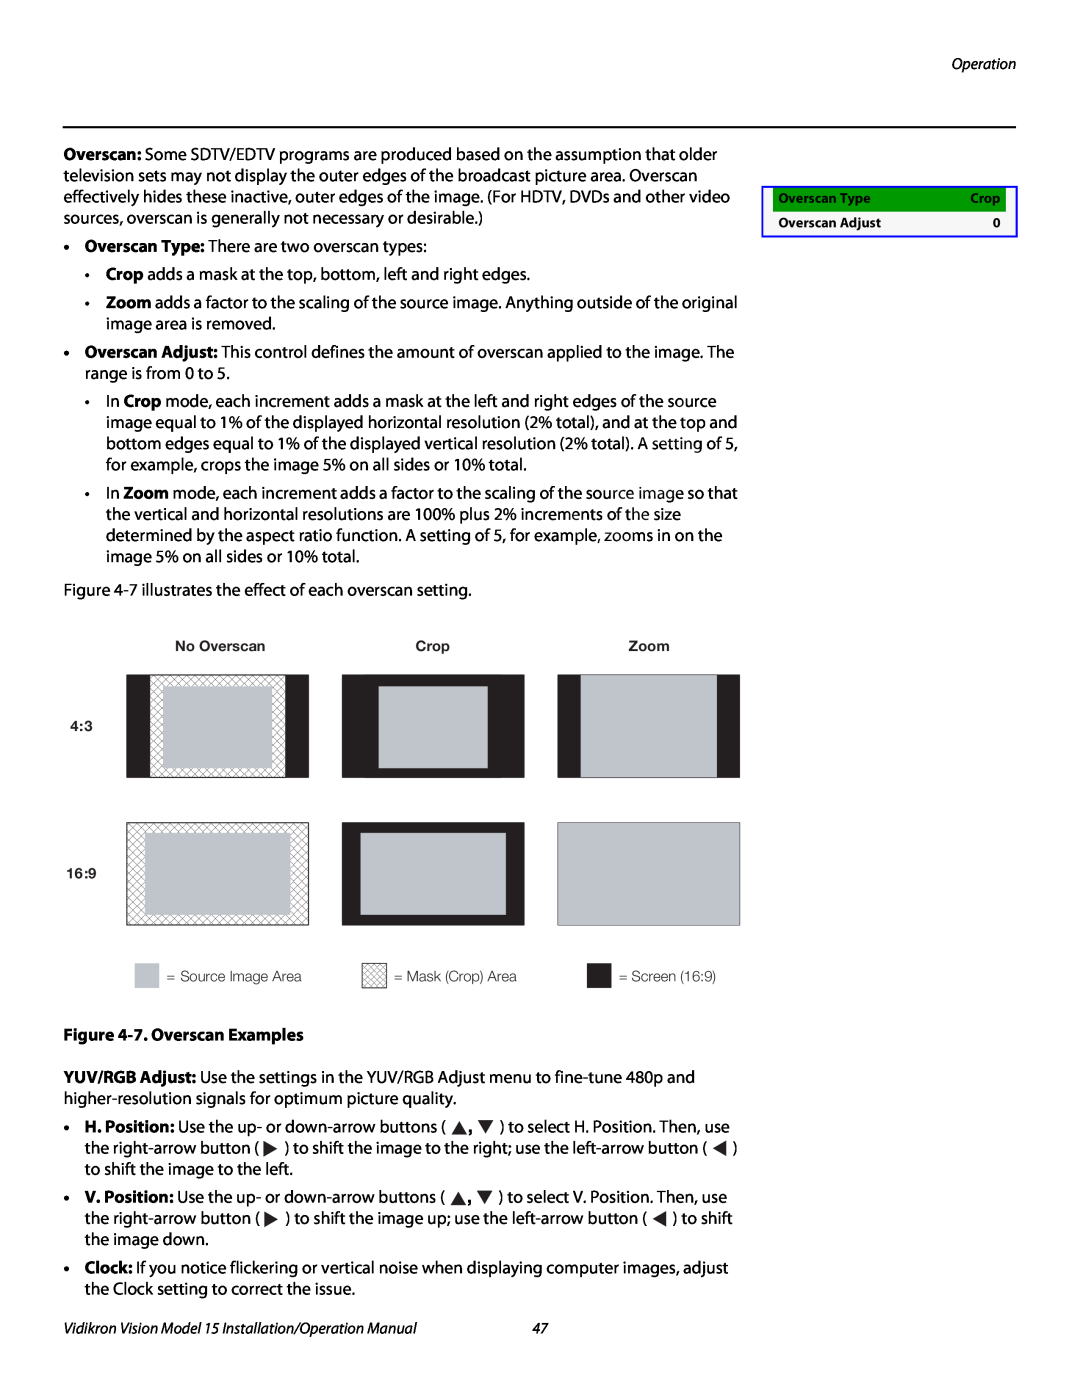 Vidikron Vision 15ET/CineWideTM operation manual 7. Overscan Examples 